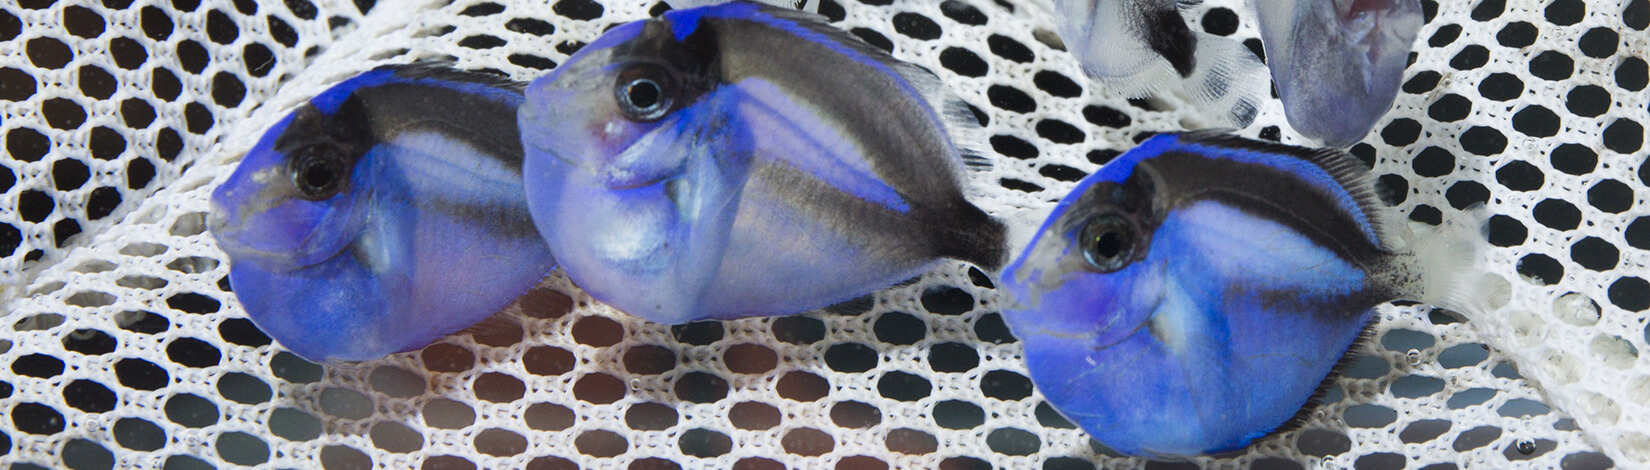 blue tang juvenile fish